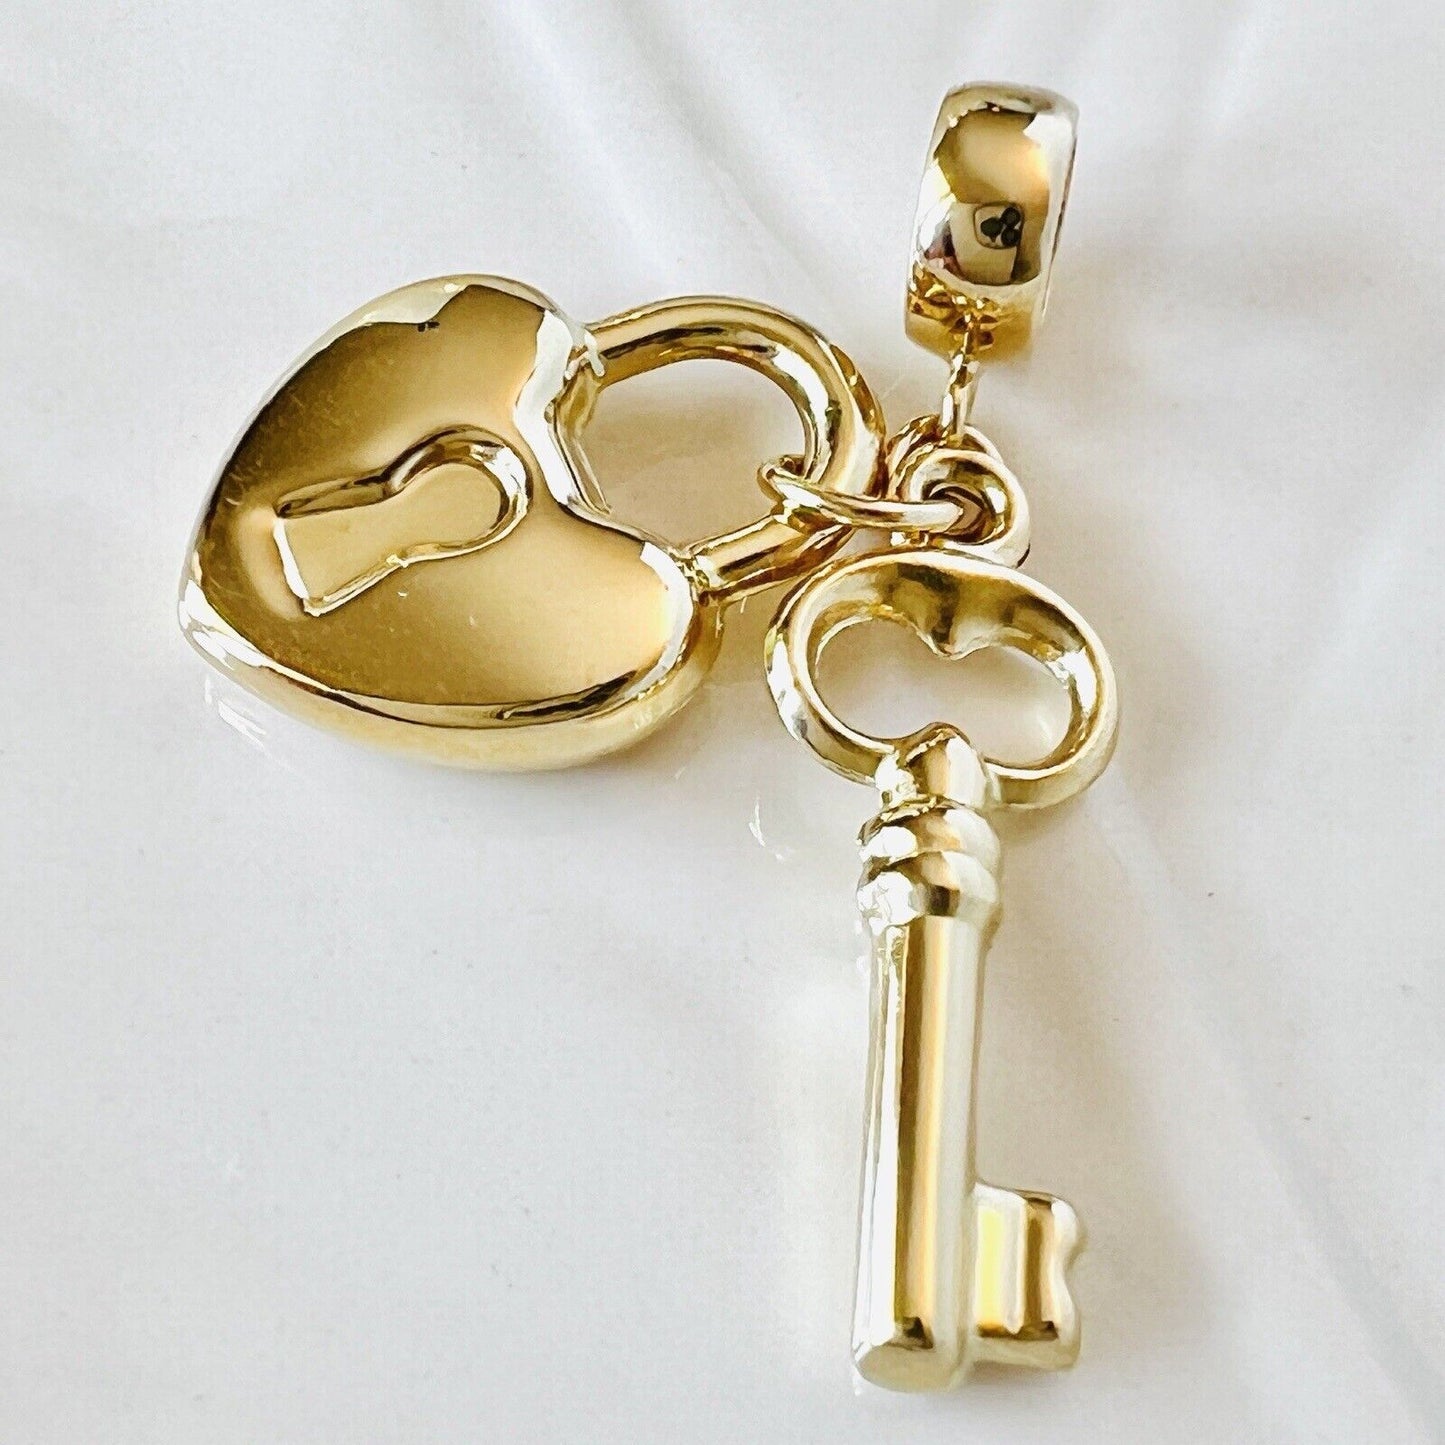 Solid 14k Yellow Gold Heart Lock & Key Charm for European Style Bracelets, New